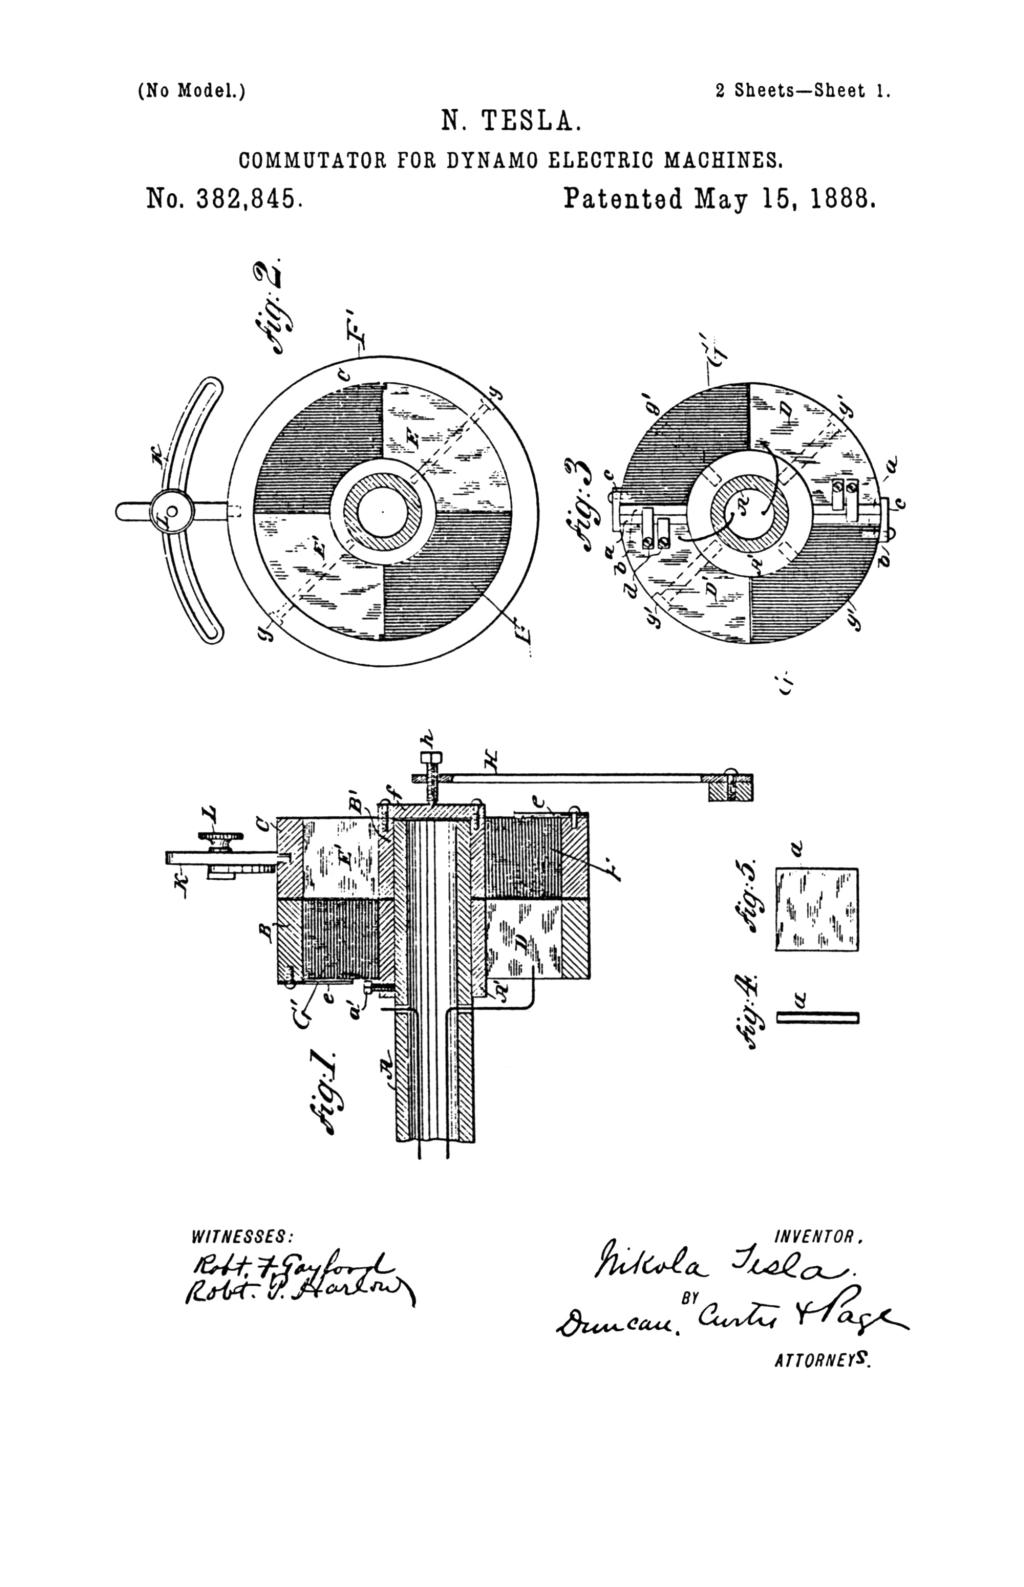 Nikola Tesla U.S. Patent 382,845 - Commutator for Dynamo-Electric Machines - Image 1